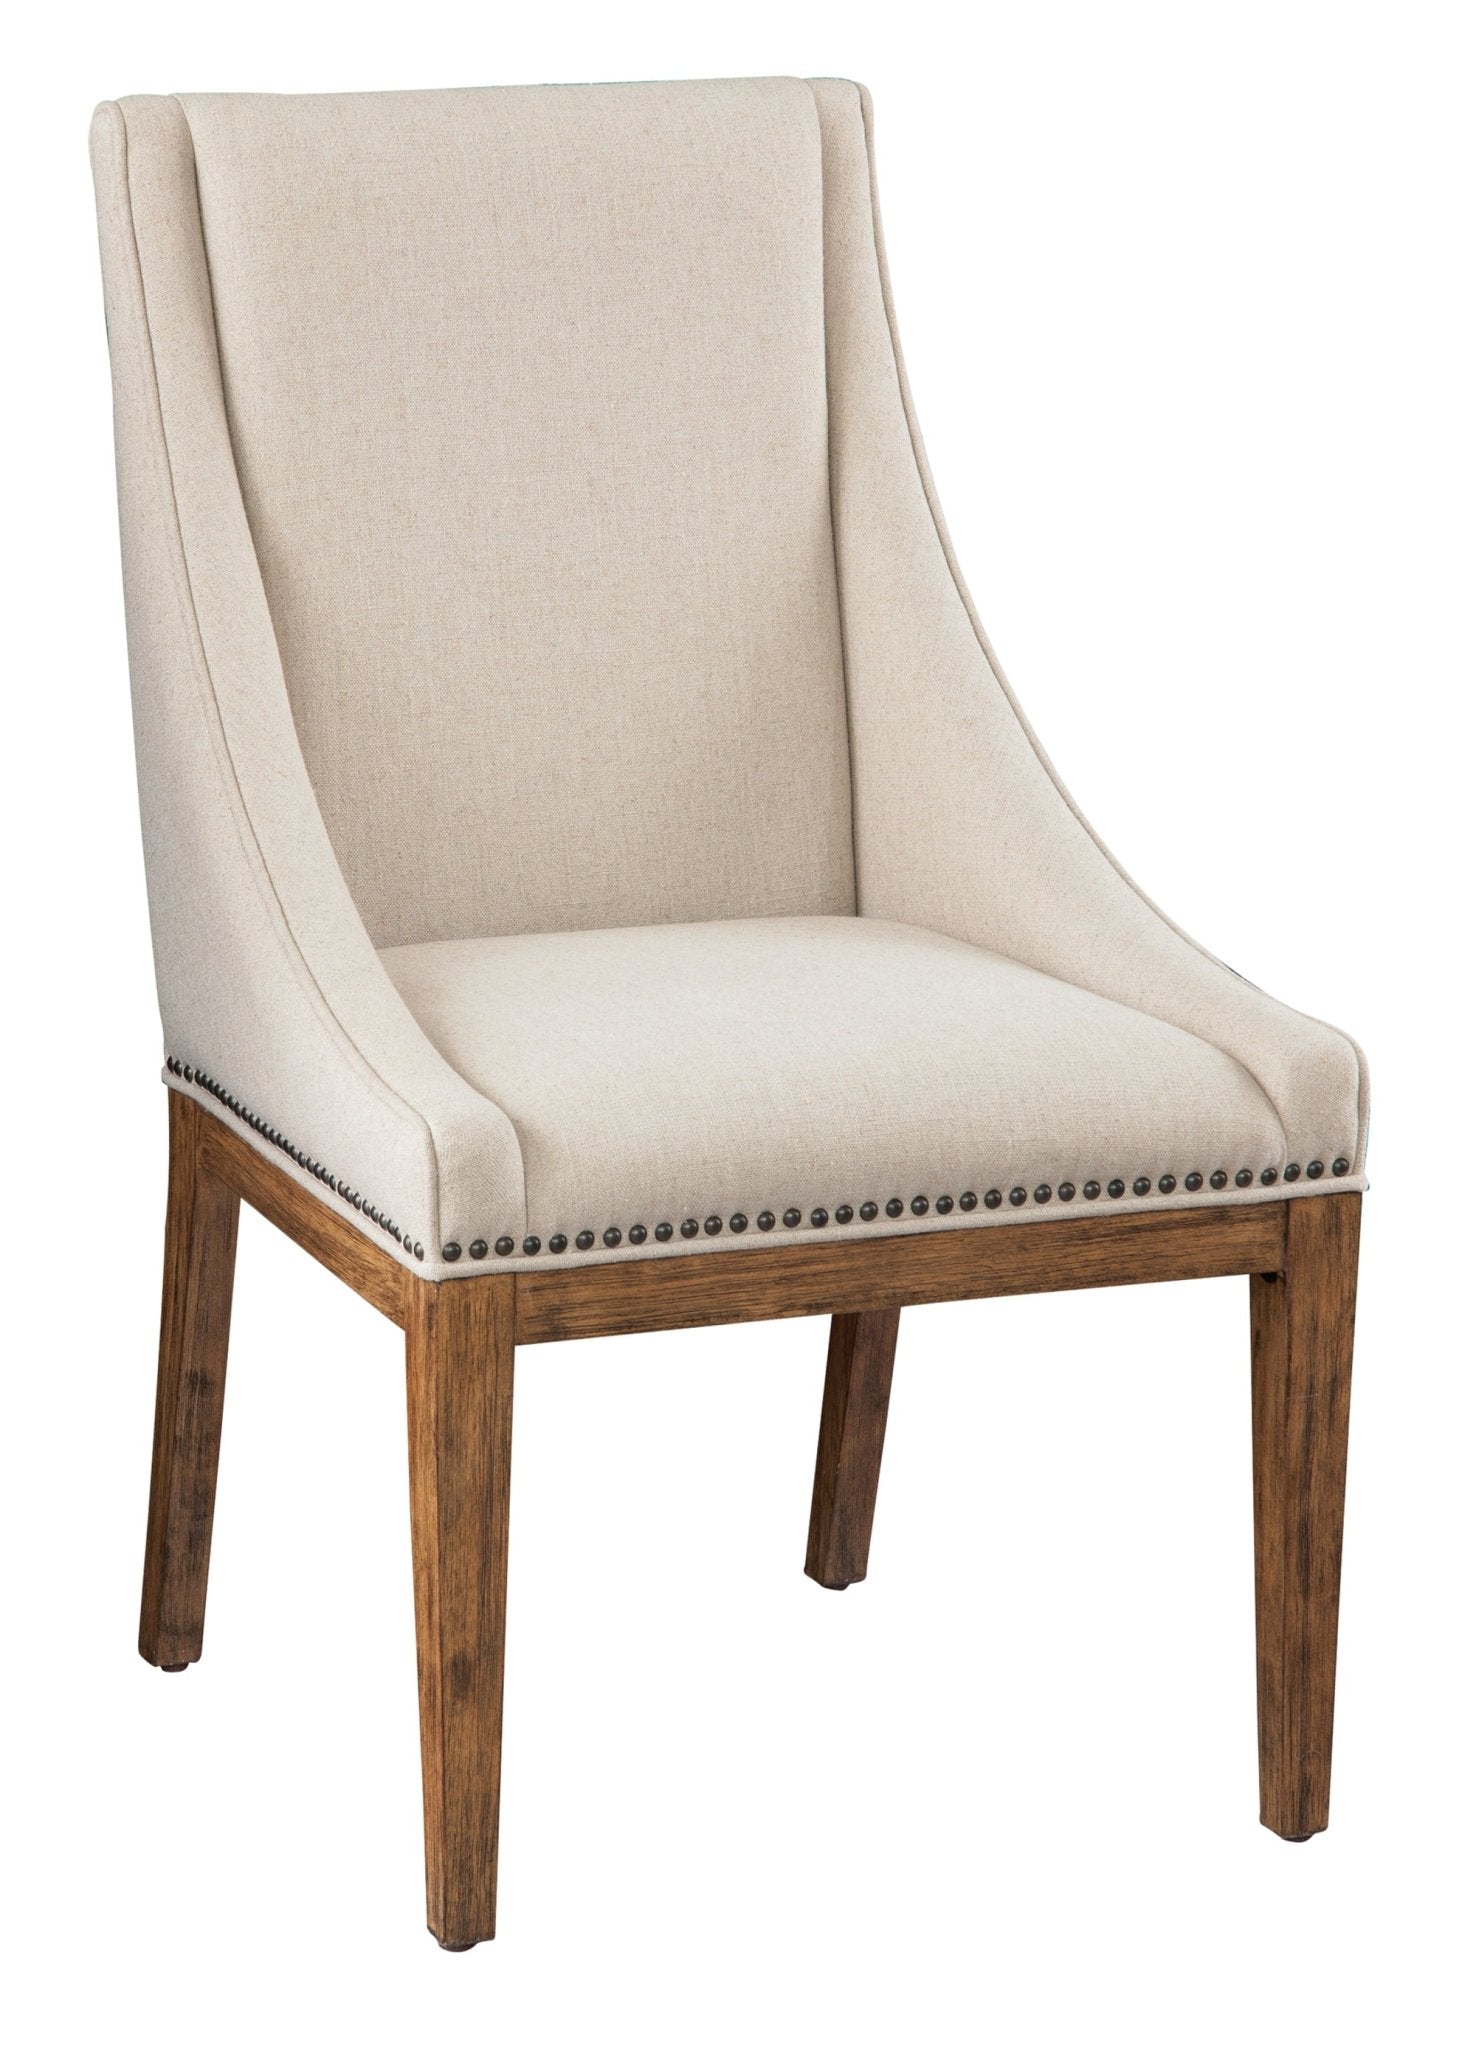 Bedford Park Sling Arm Chair - Furniture - Tipplergoods